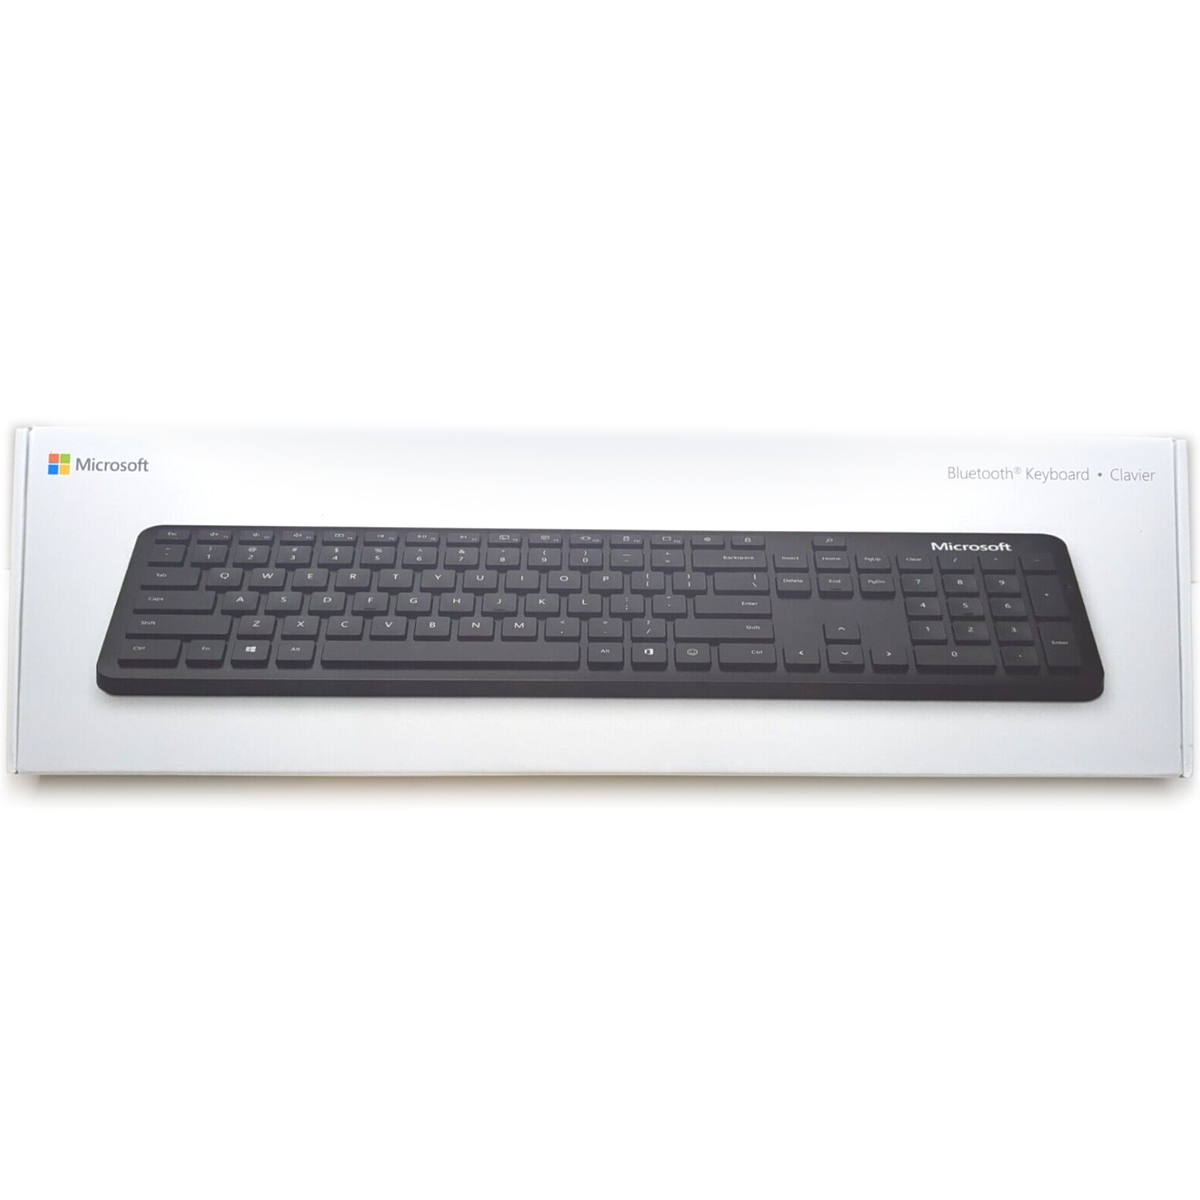 Microsoft Bluetooth Keyboard - Black QSZ-00001 - $34.99